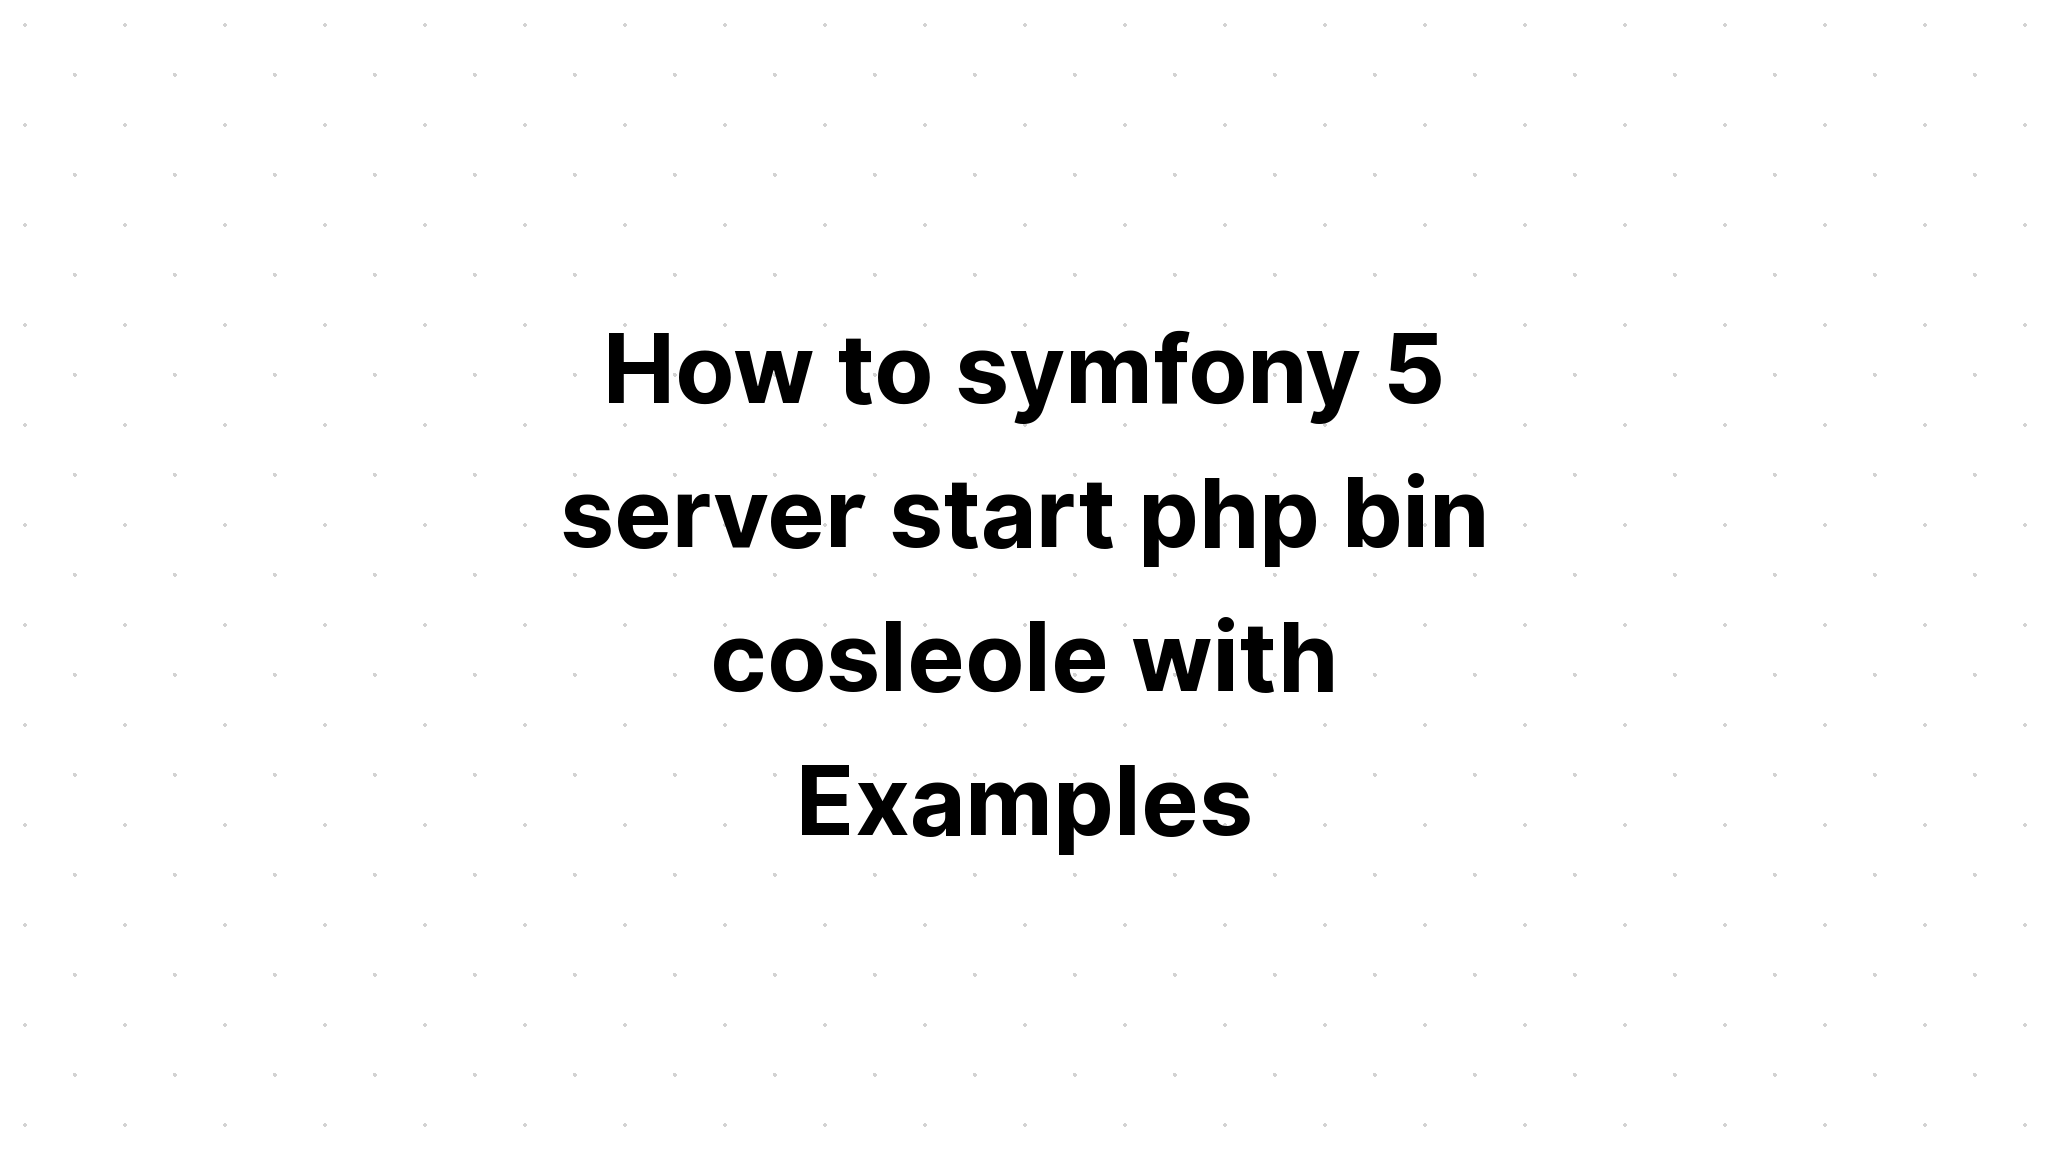 Cara menjalankan server symfony 5 php bin cosleole dengan Contoh